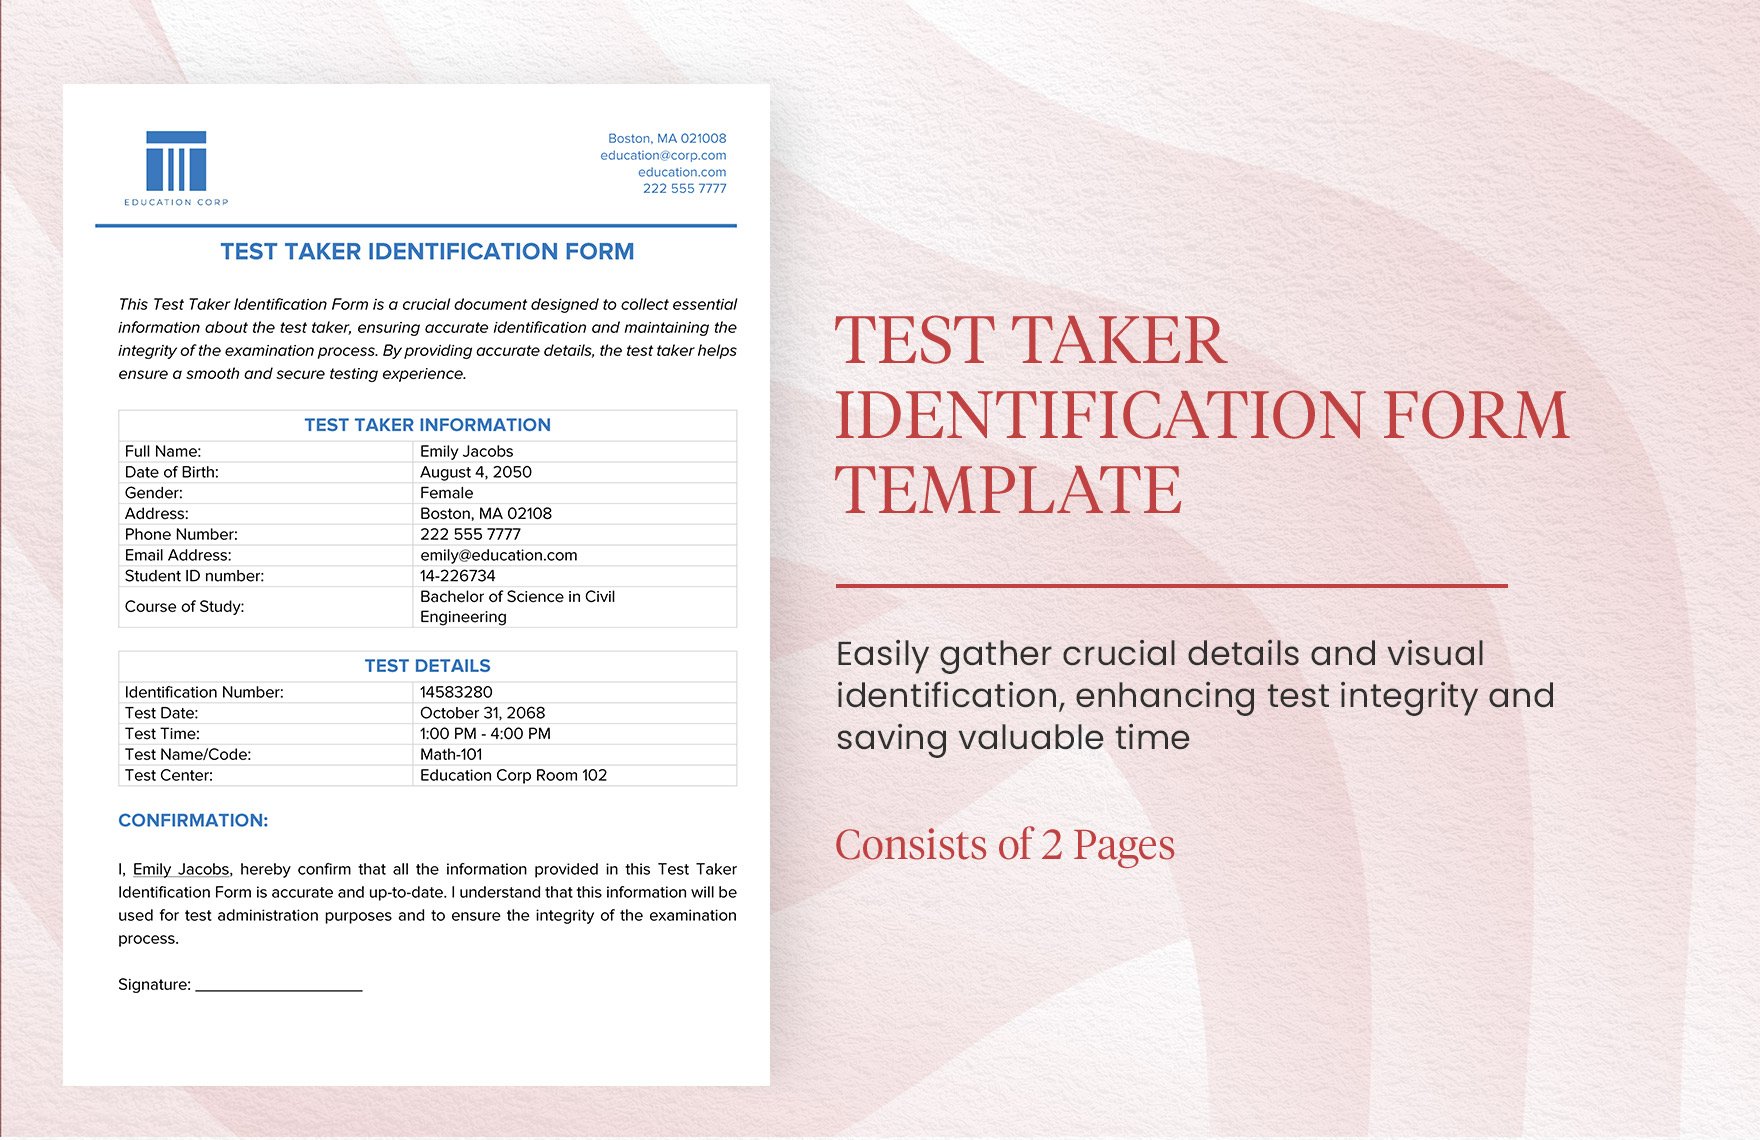 Test Taker Identification Form Template in Word, Google Docs, PDF